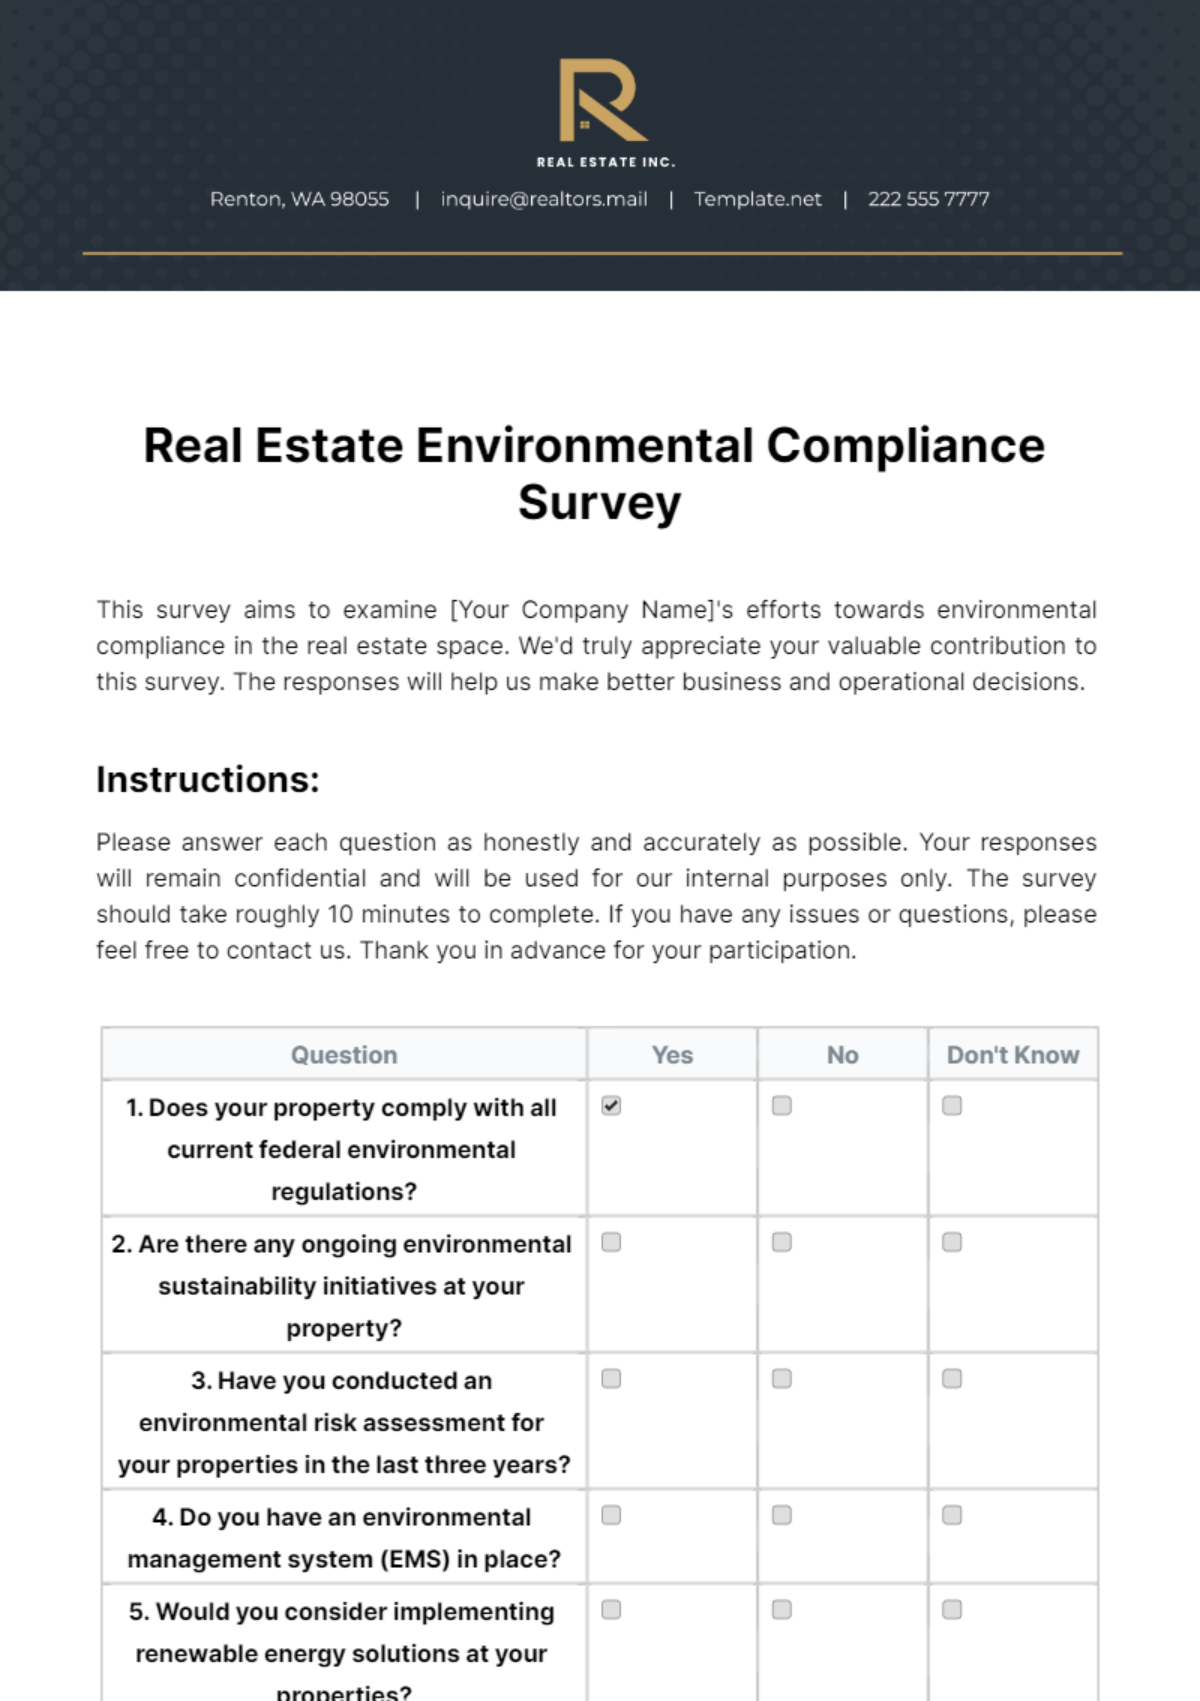 Real Estate Environmental Compliance Survey Template